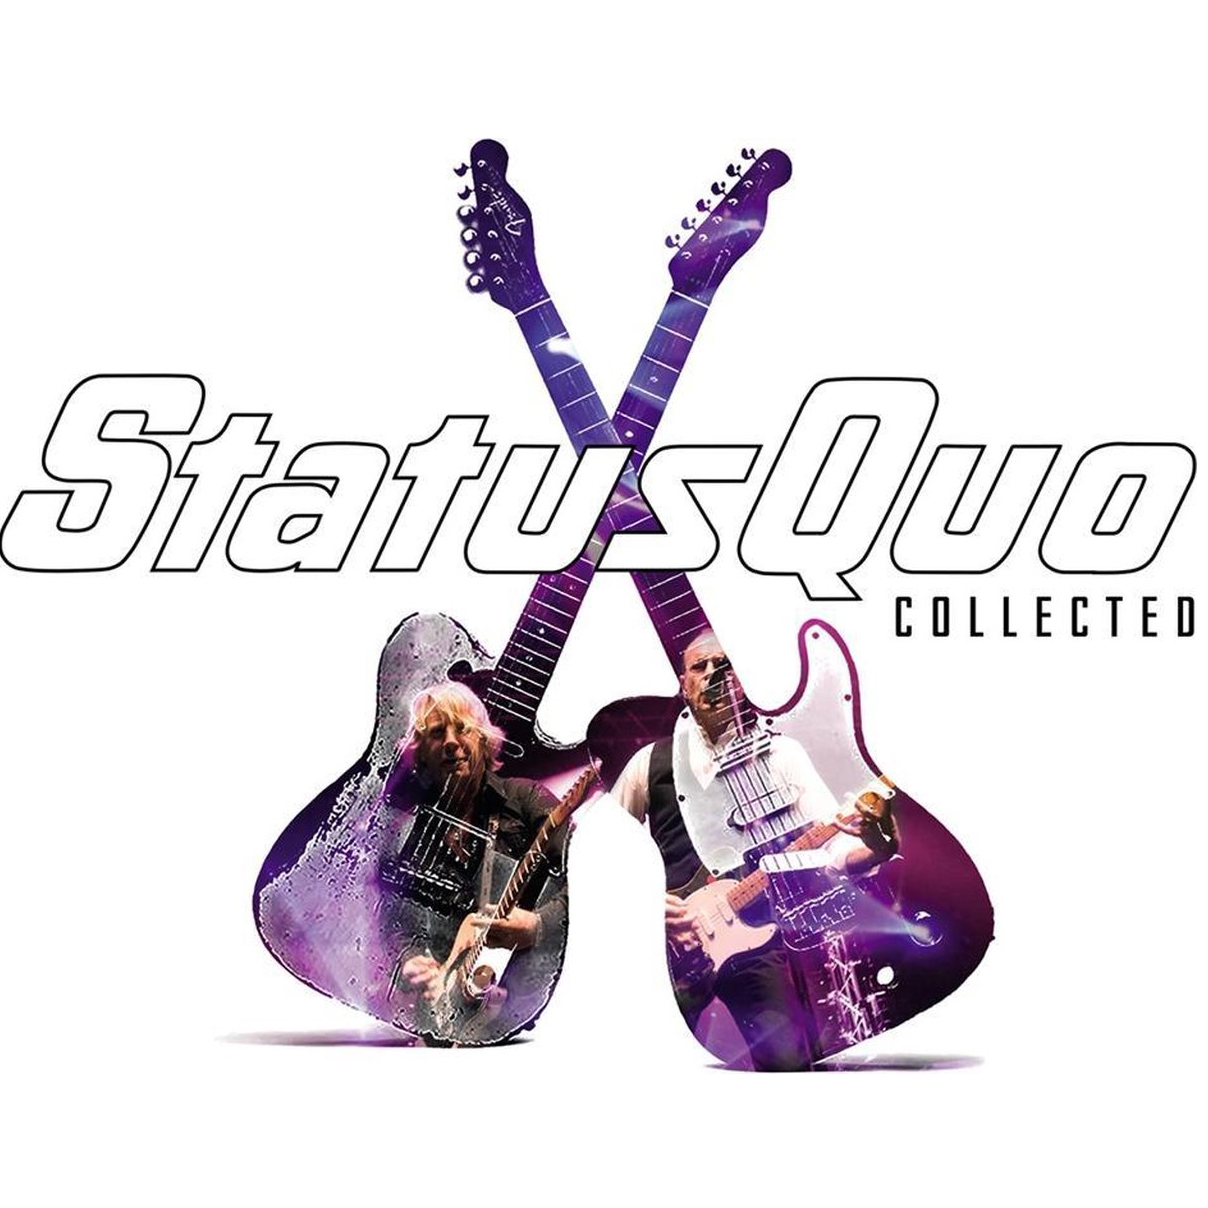 Static collection. Status Quo *** collection ***. Статус кво лого. Status Quo collected. Status Quo Band логотип.